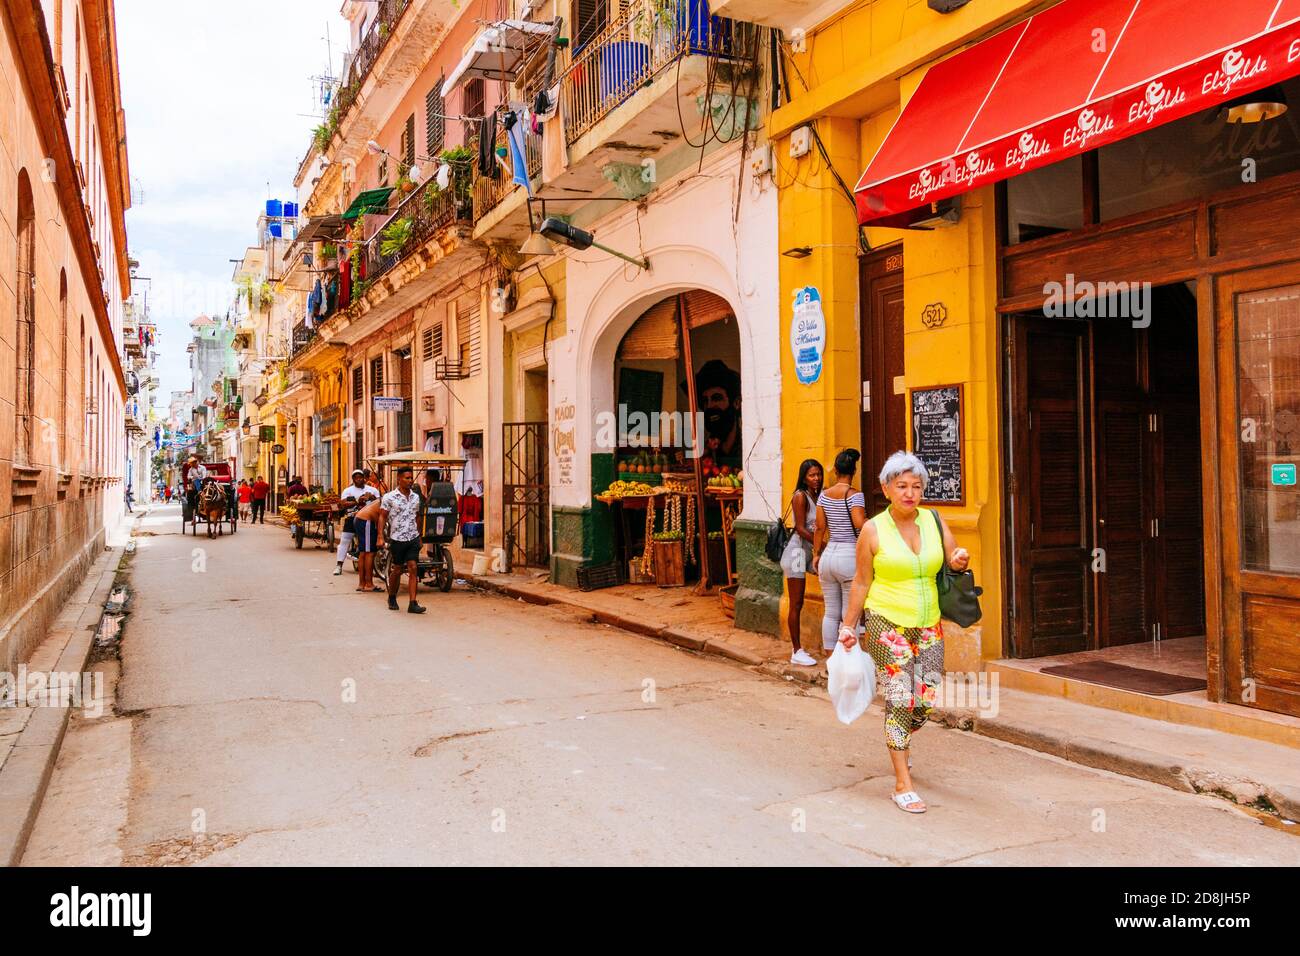 Kubanische lokale Atmosphäre in einer beliebten Straße. La Habana - La Havanna, Kuba, Lateinamerika und die Karibik Stockfoto